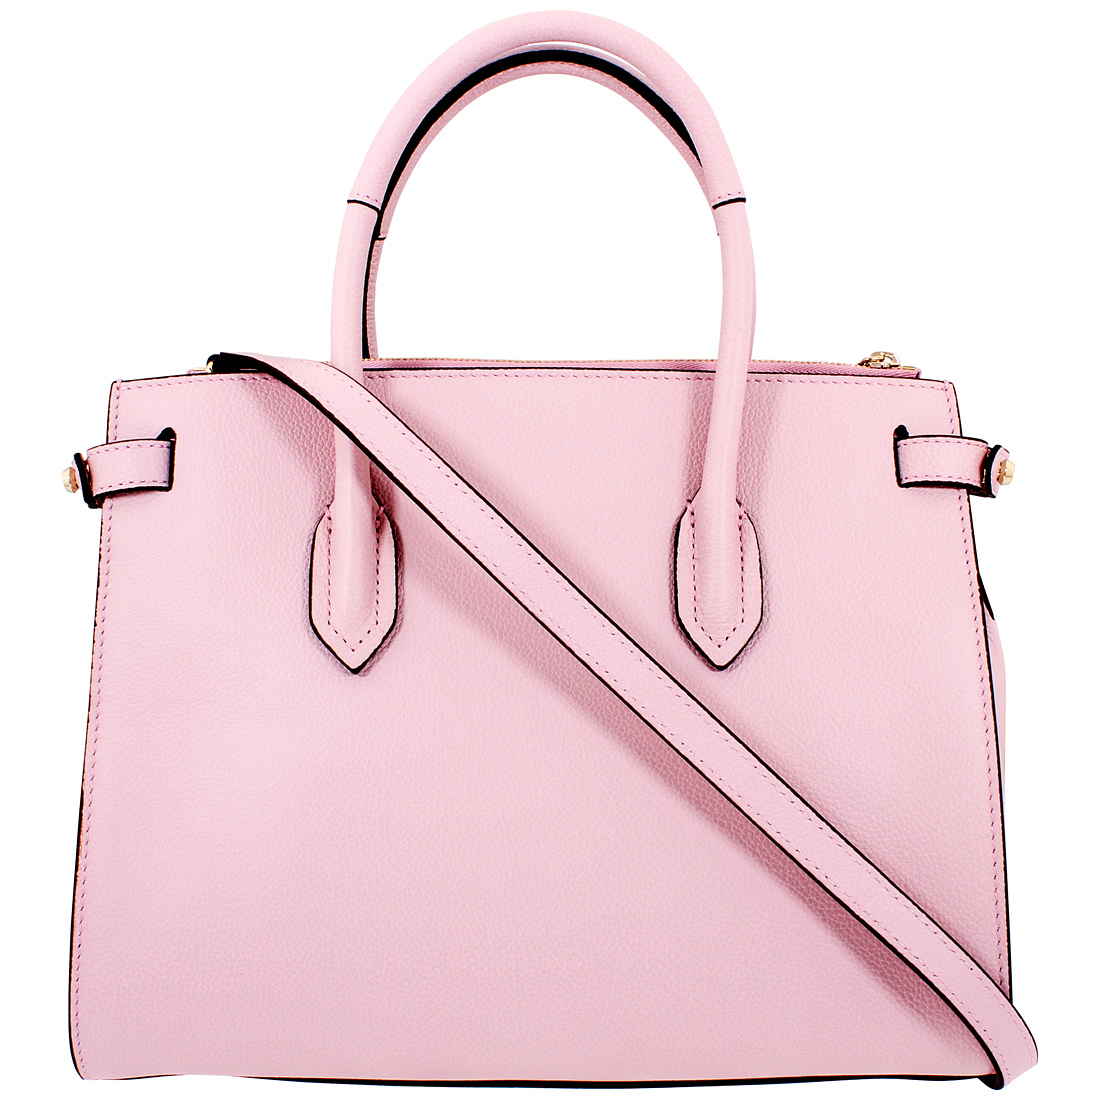 Furla Pin Ladies Medium Pink Leather Tote Bag 967814 8050560016838 | eBay